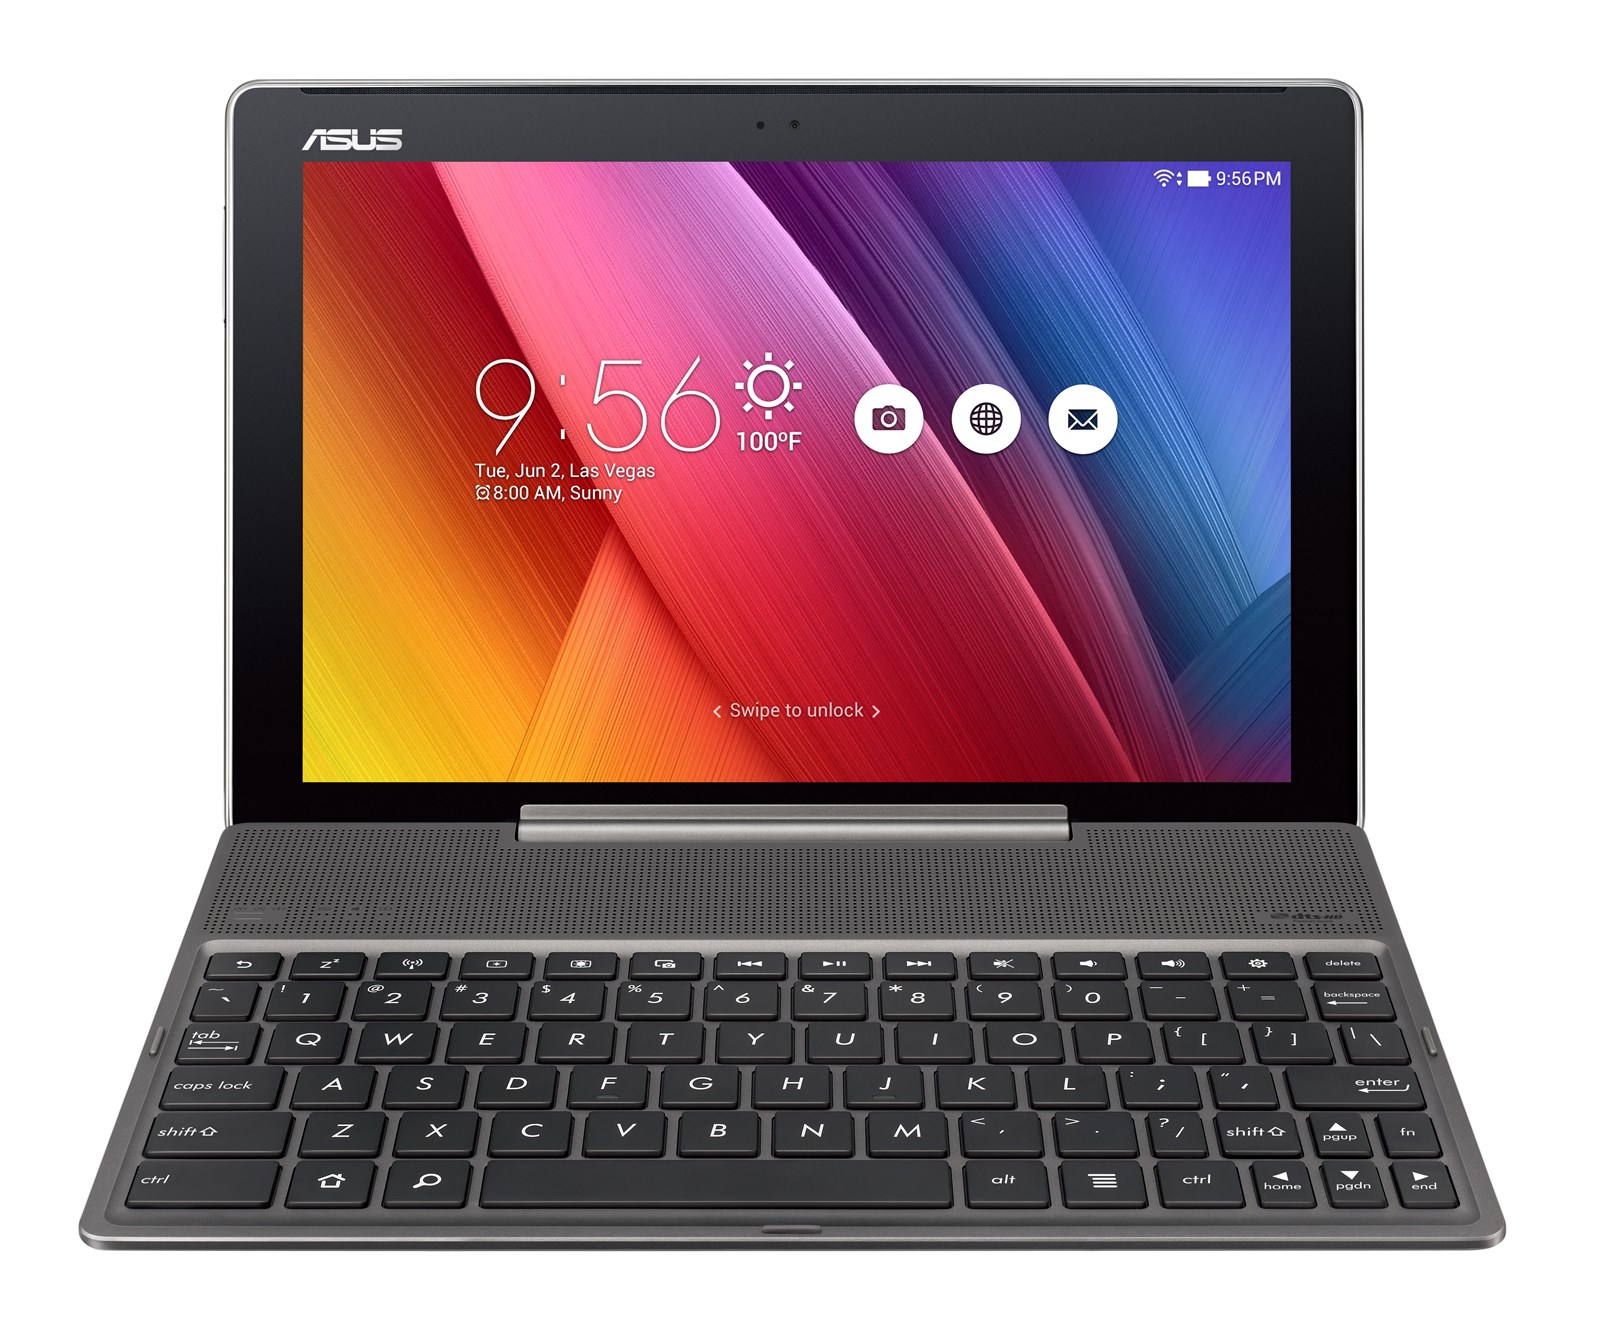 ZenPad 10 Review – Asus ZenPad Z300 Tablet Specs – Pre Order